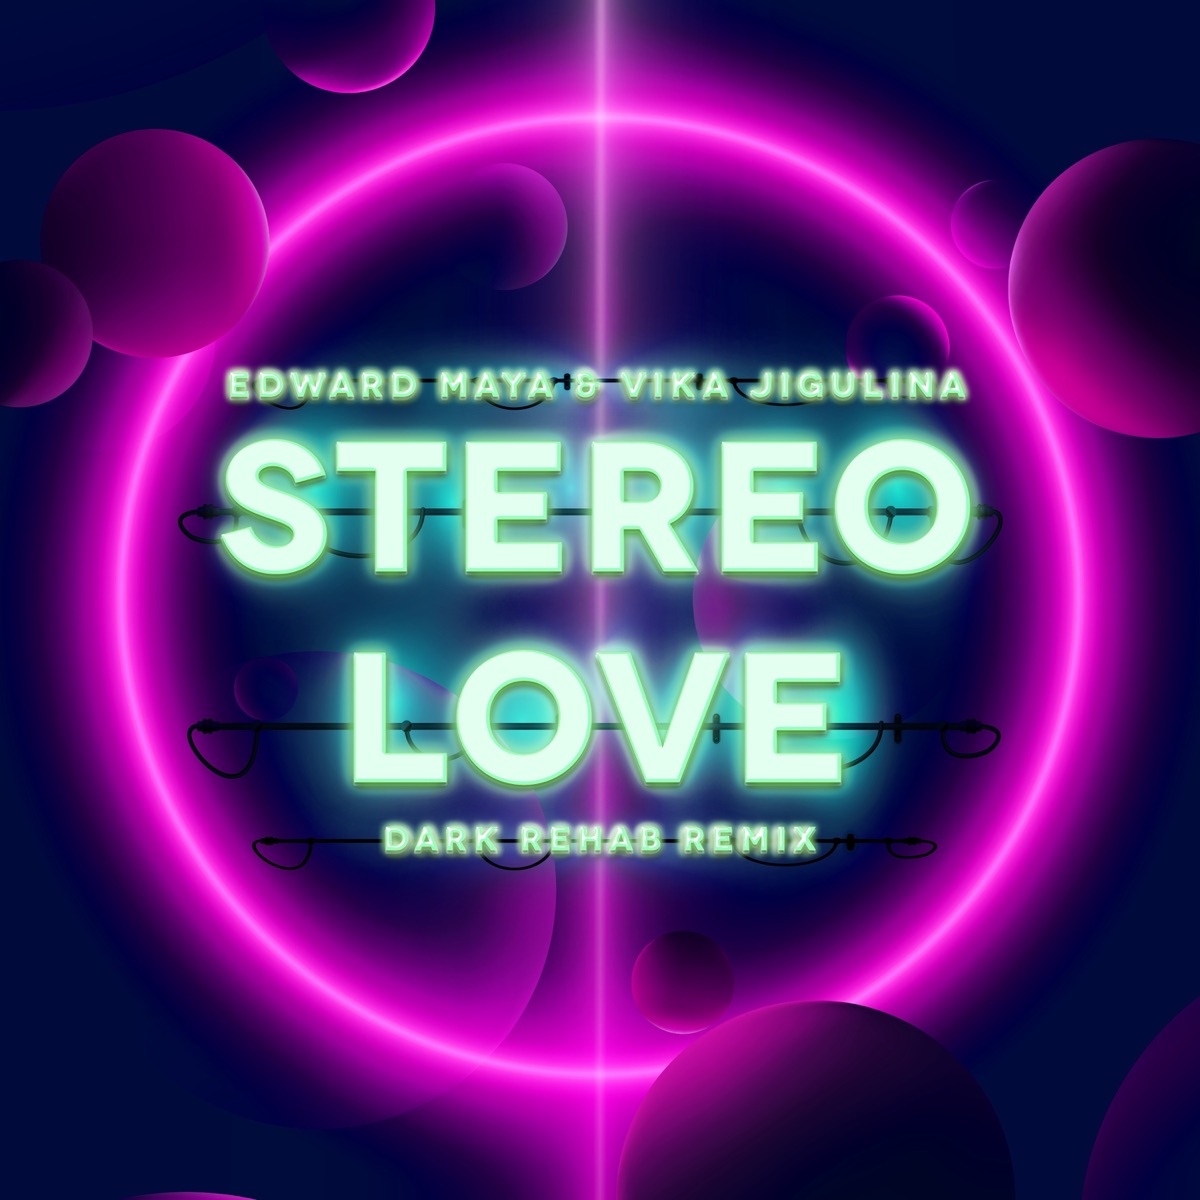 Stereo Love - EP - Album by Edward Maya & Mia Martina - Apple Music